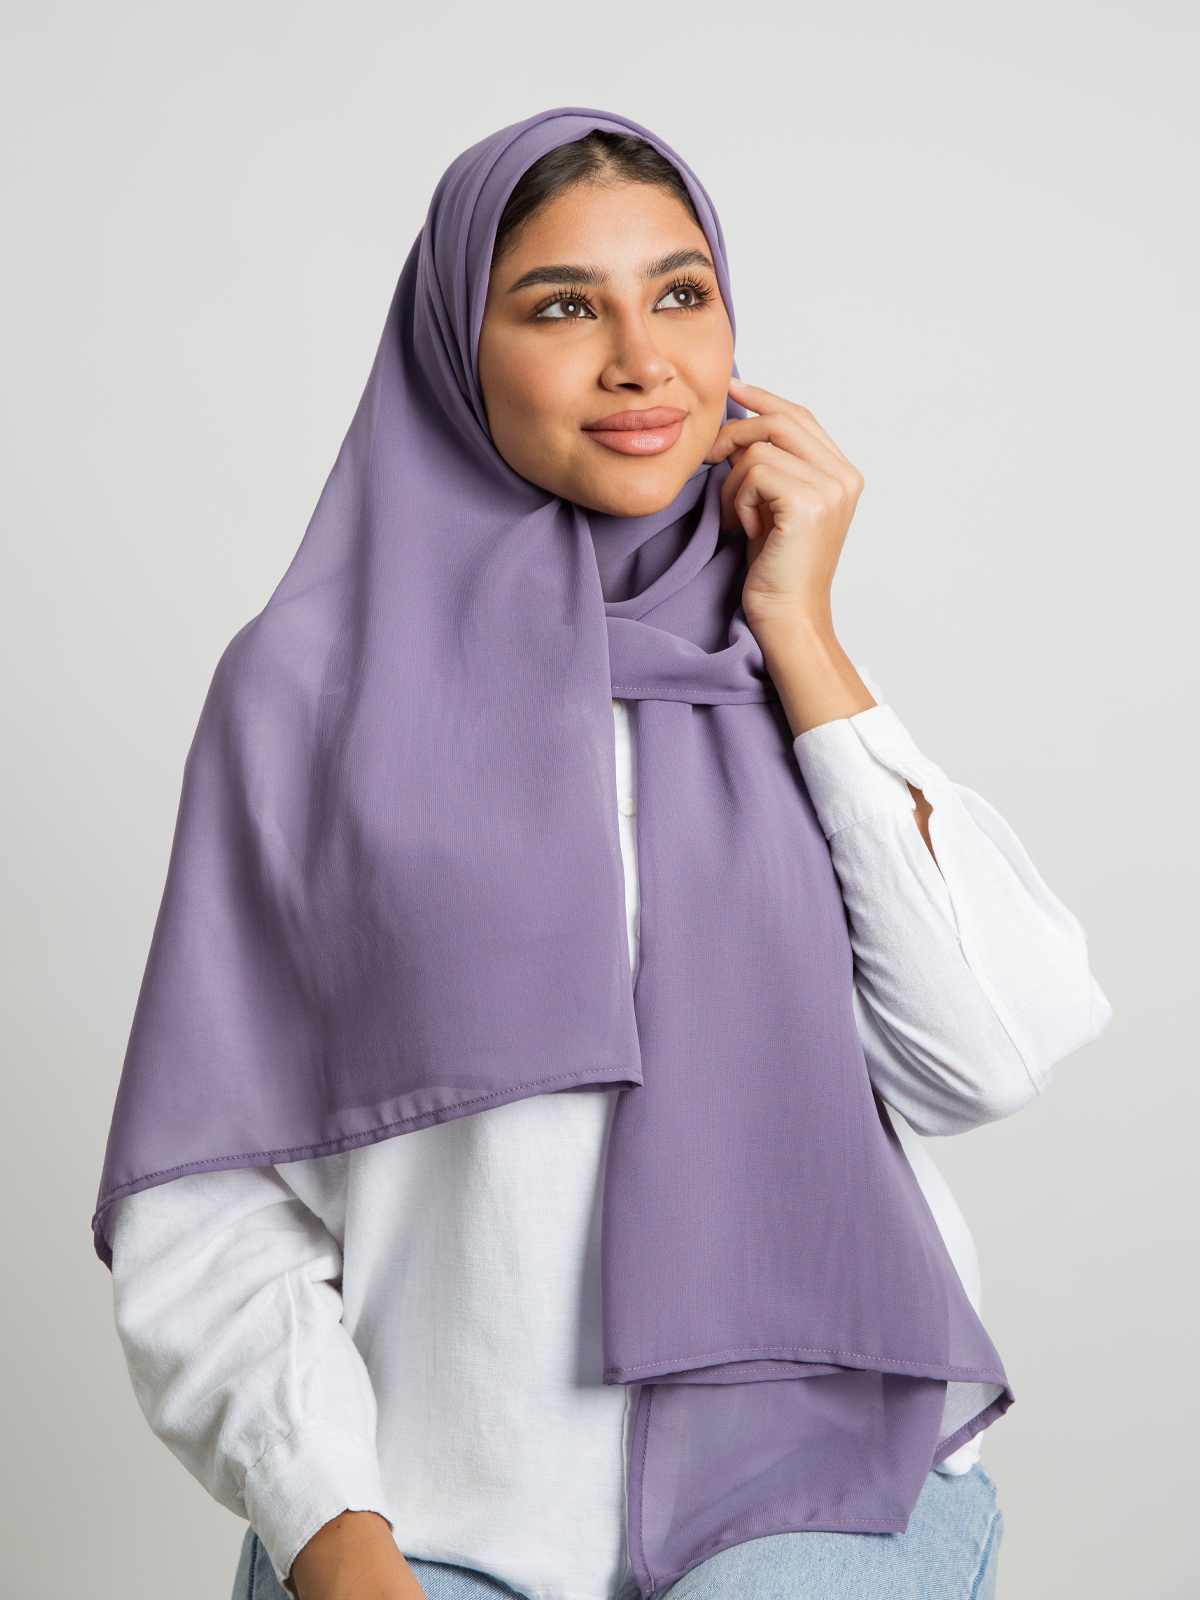 Purple plain light chiffon tarha by kaafmeem hijab for daily wear available in multiple colors